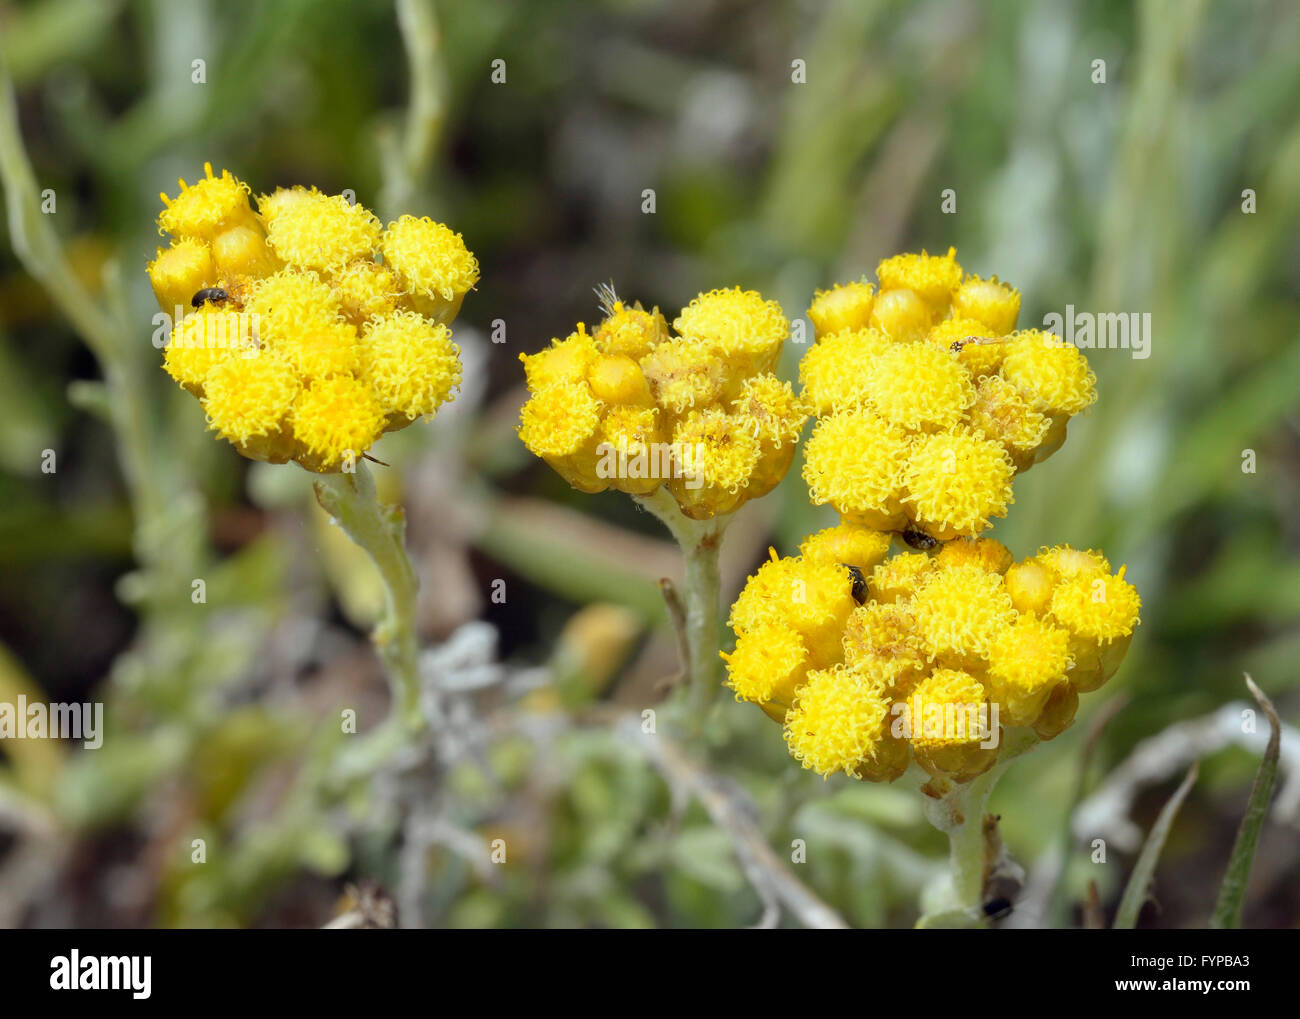 Helichrysum stoechas barrelieri syn. Helichrysum conglobatum Yellow flower from Cyprus Stock Photo